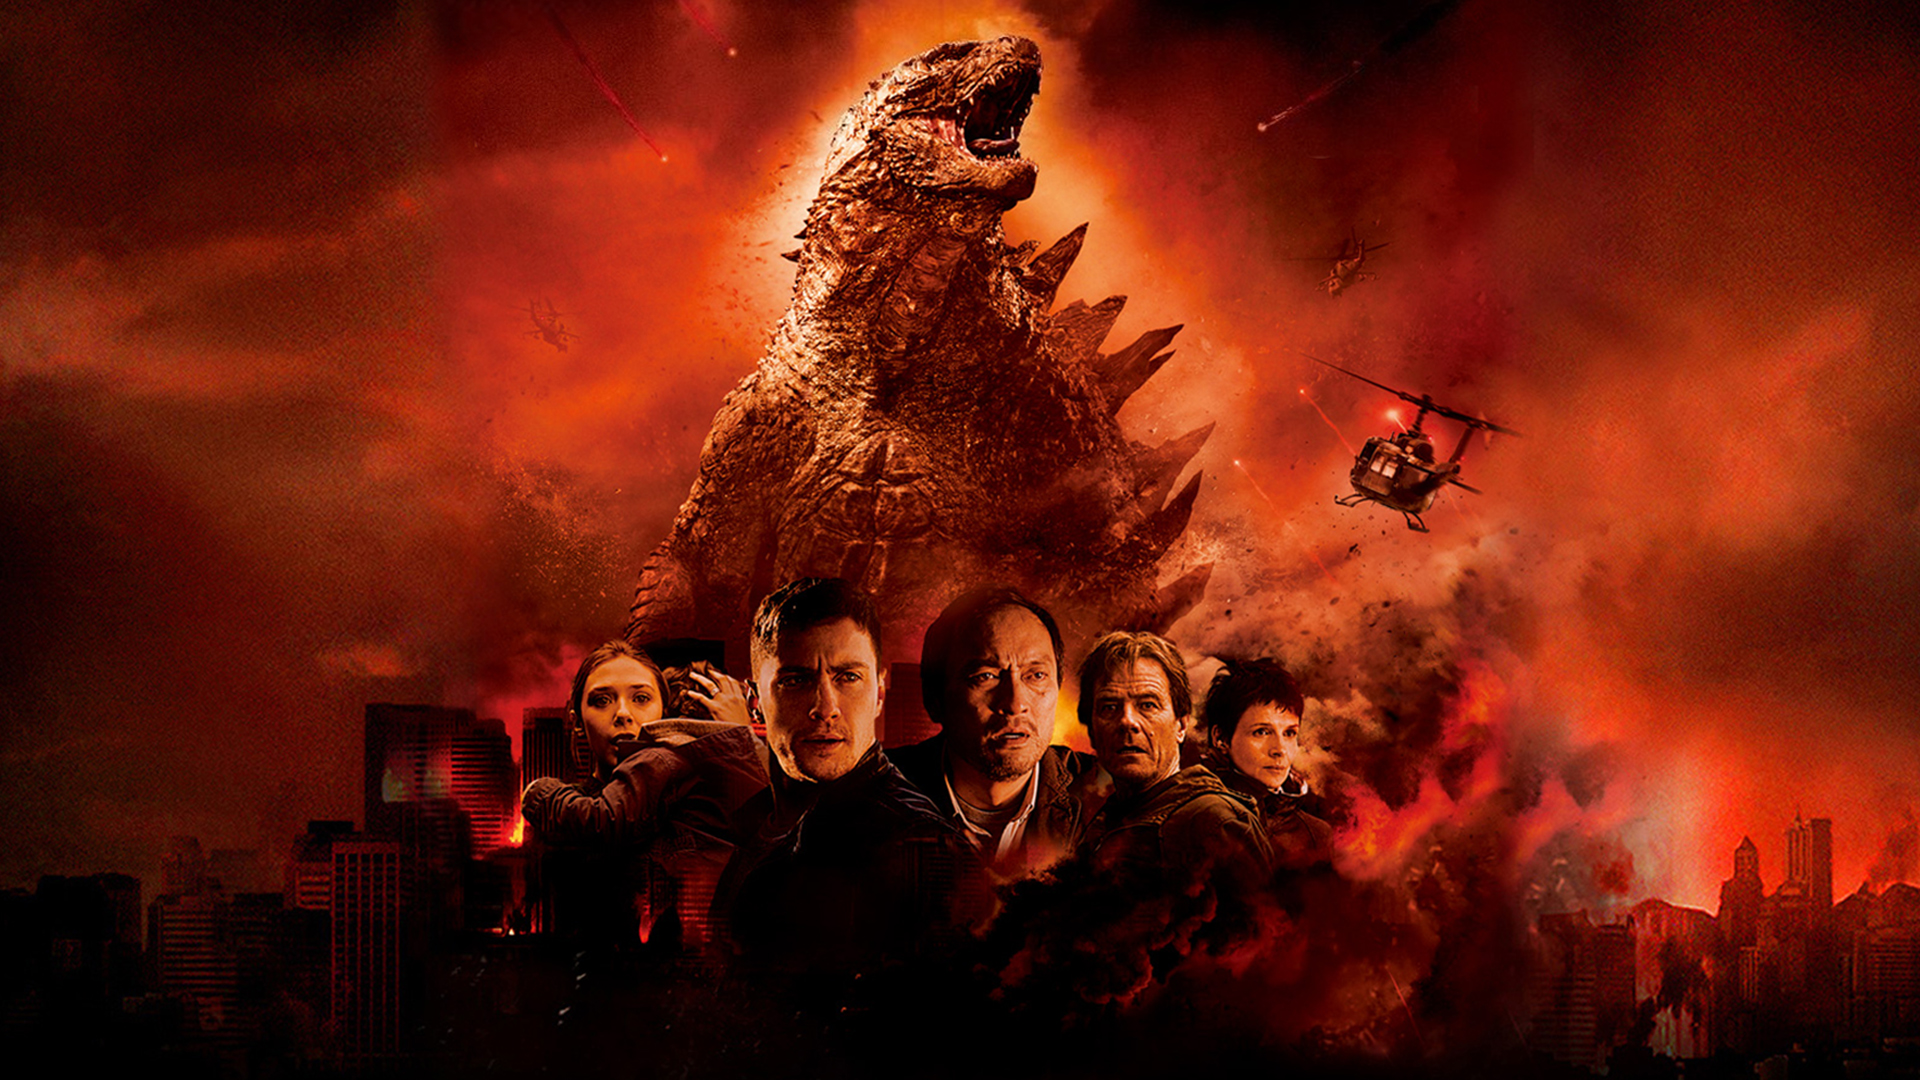 Godzilla 2014 Wallpaper images